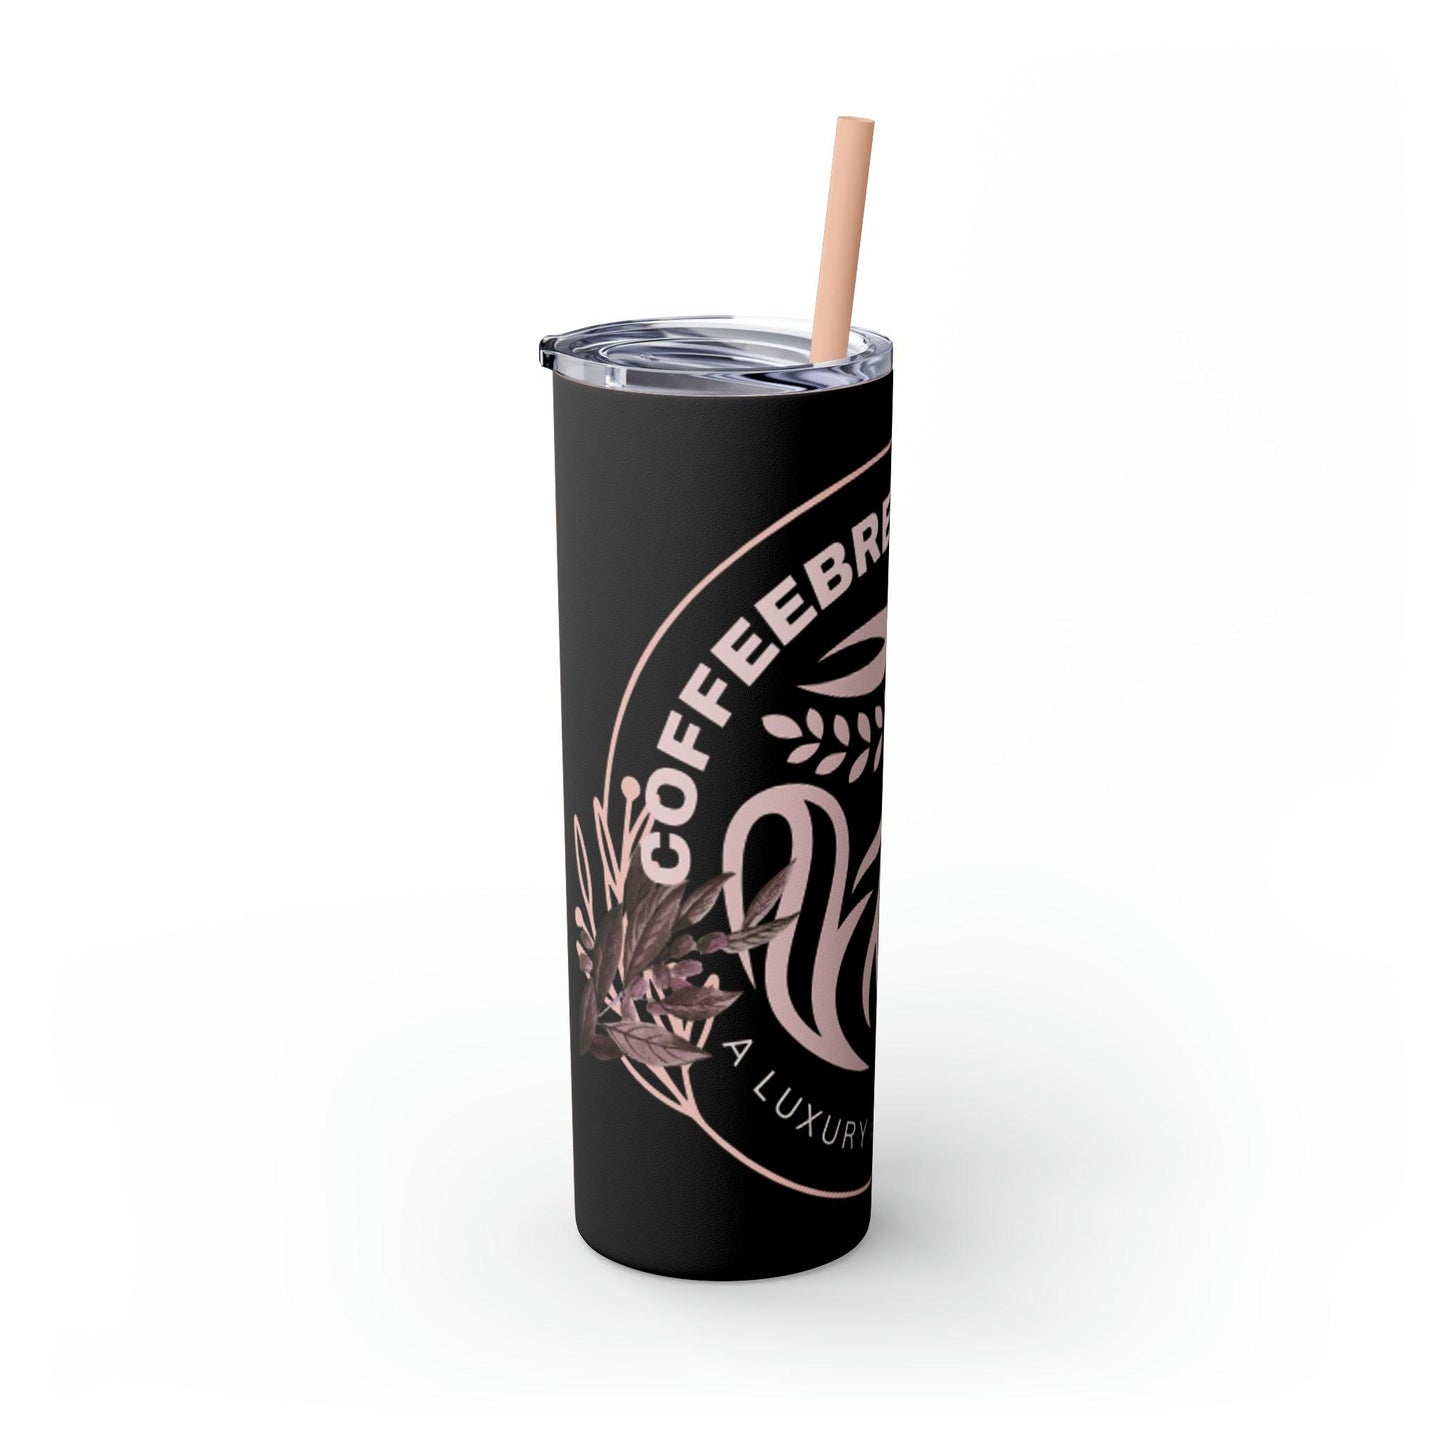 Coffeebre Lifestyle Skinny Tumbler with Straw, 20oz - COFFEEBRE